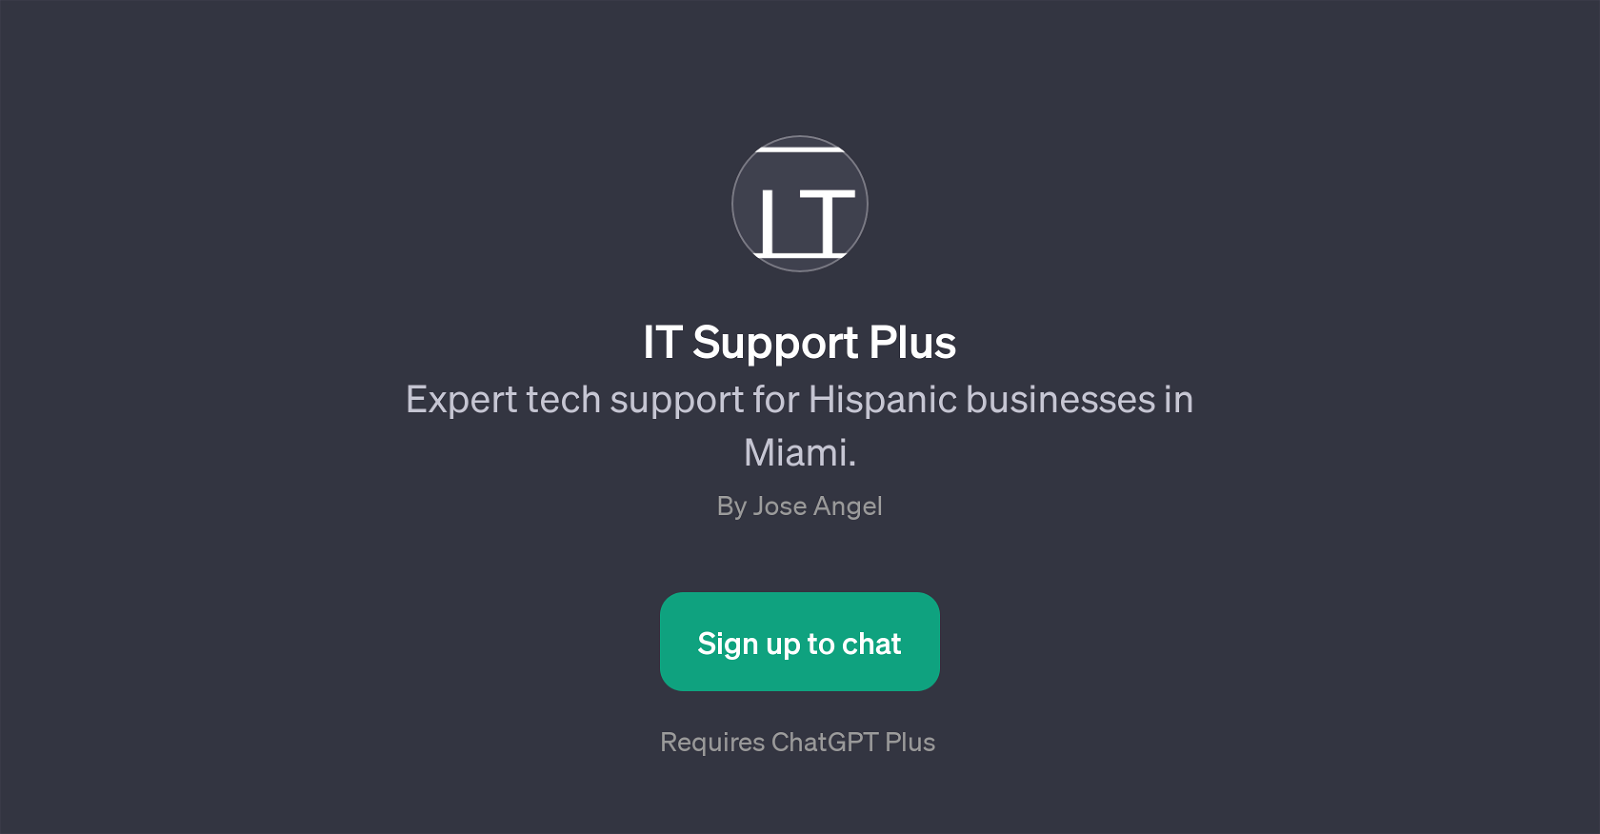 IT Support Plus website